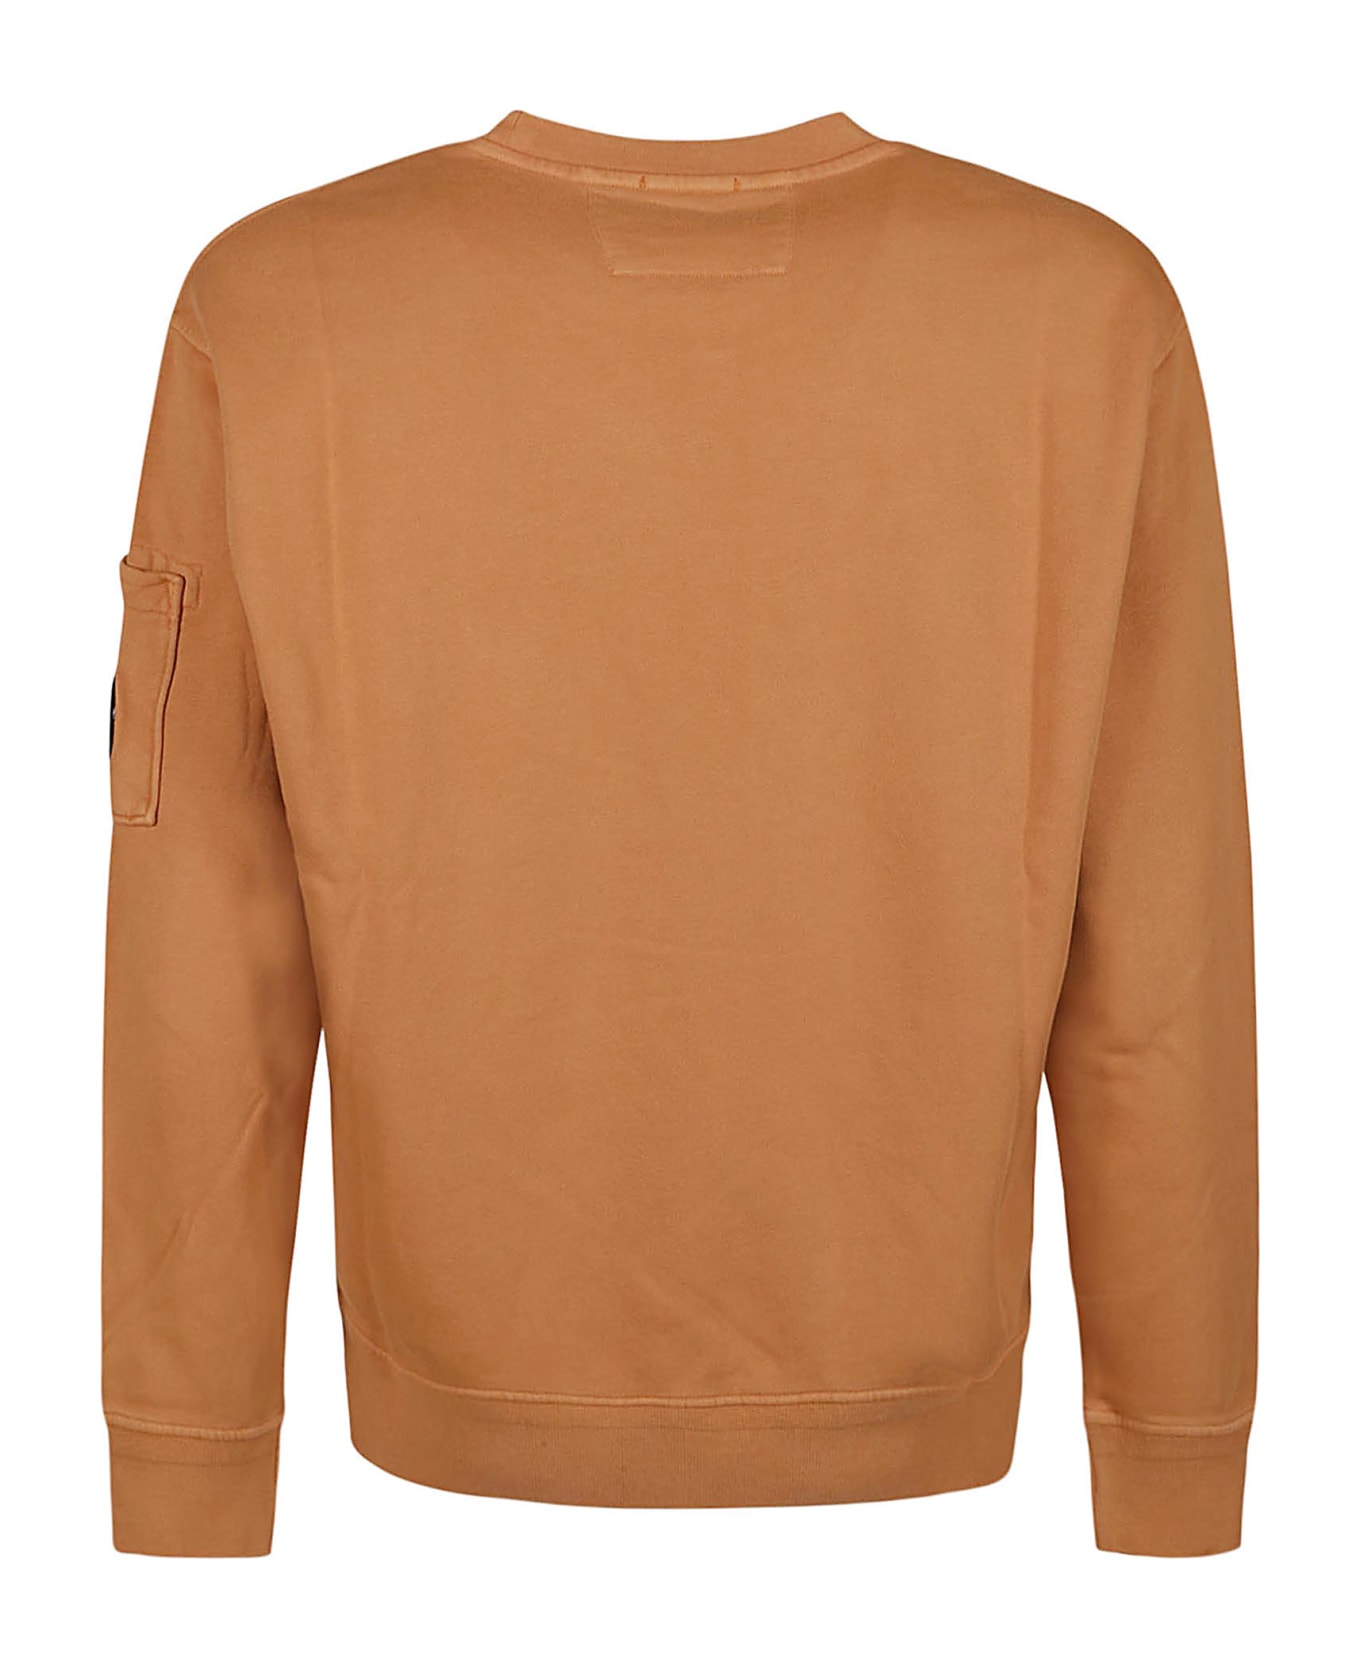 C.P. Company Diagonal Fleece Sweatshirt - PASTRY SHELL